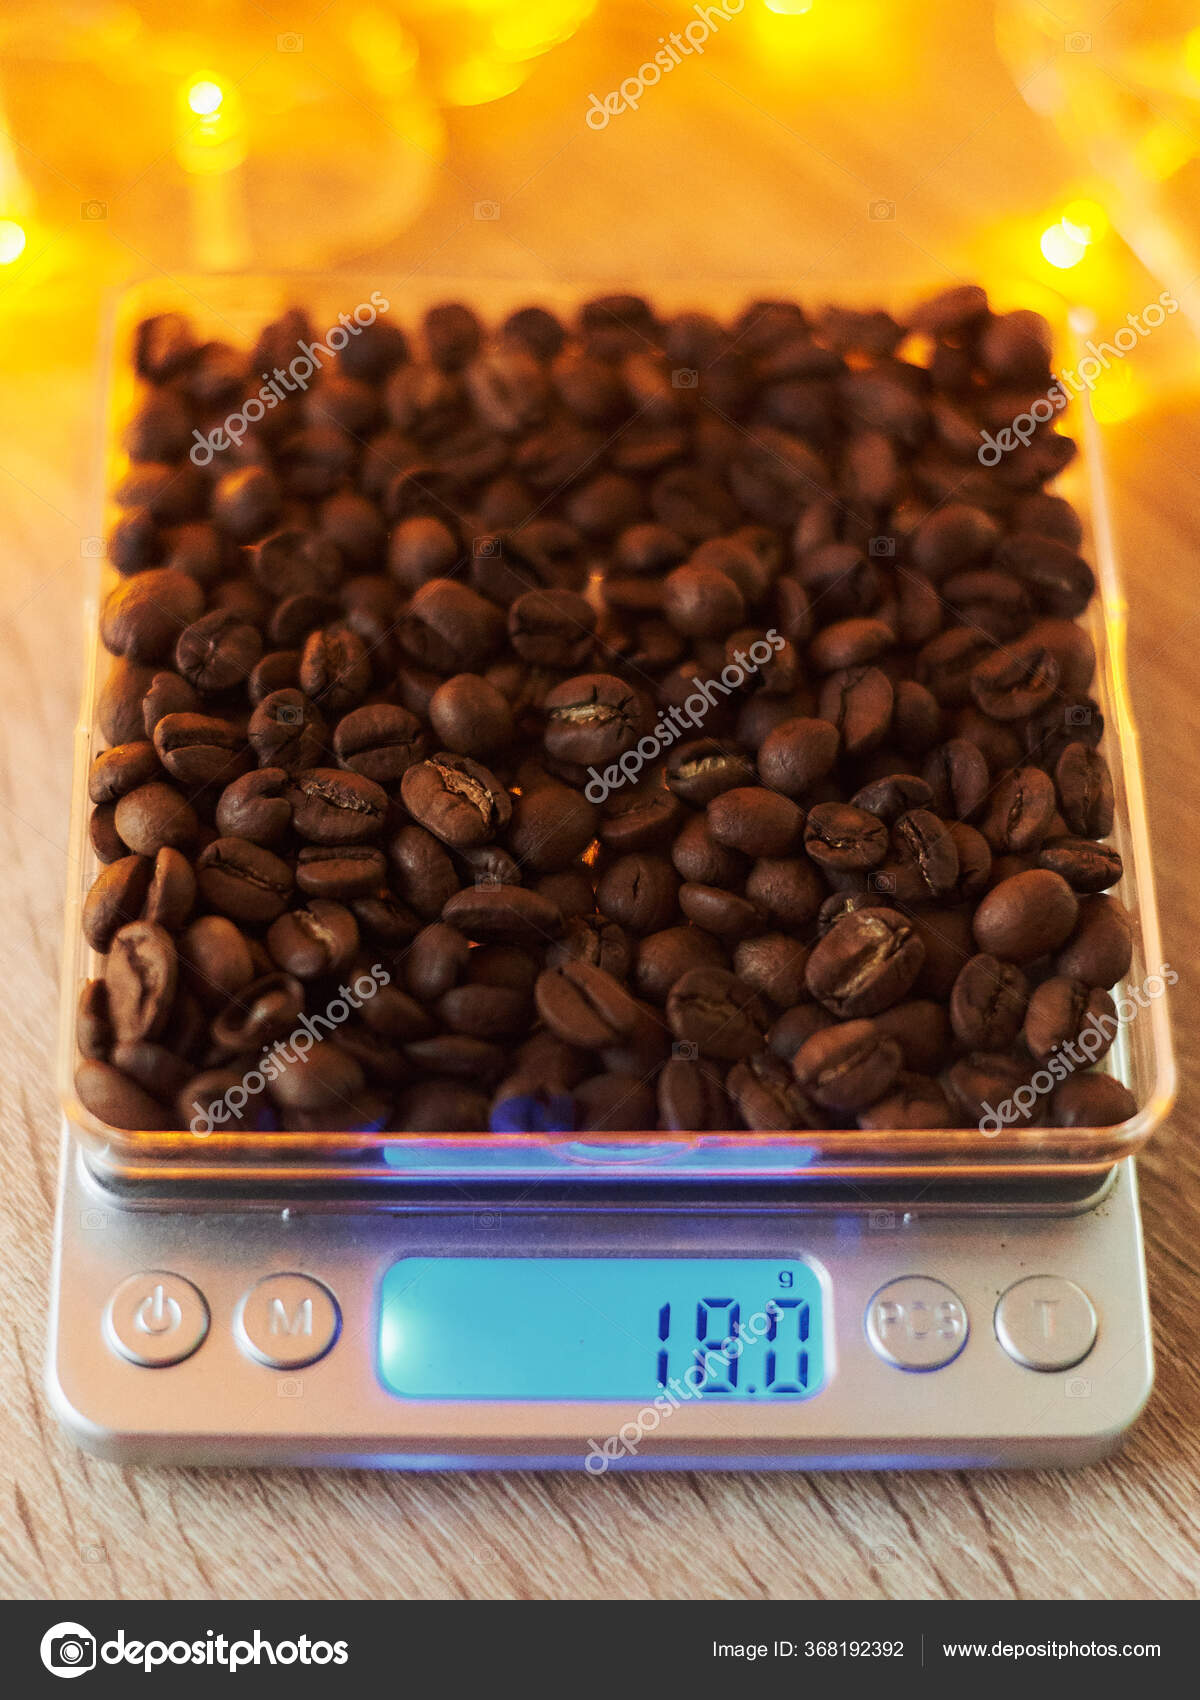 https://st3.depositphotos.com/6817322/36819/i/1600/depositphotos_368192392-stock-photo-eighteen-grams-roasted-coffee-beans.jpg